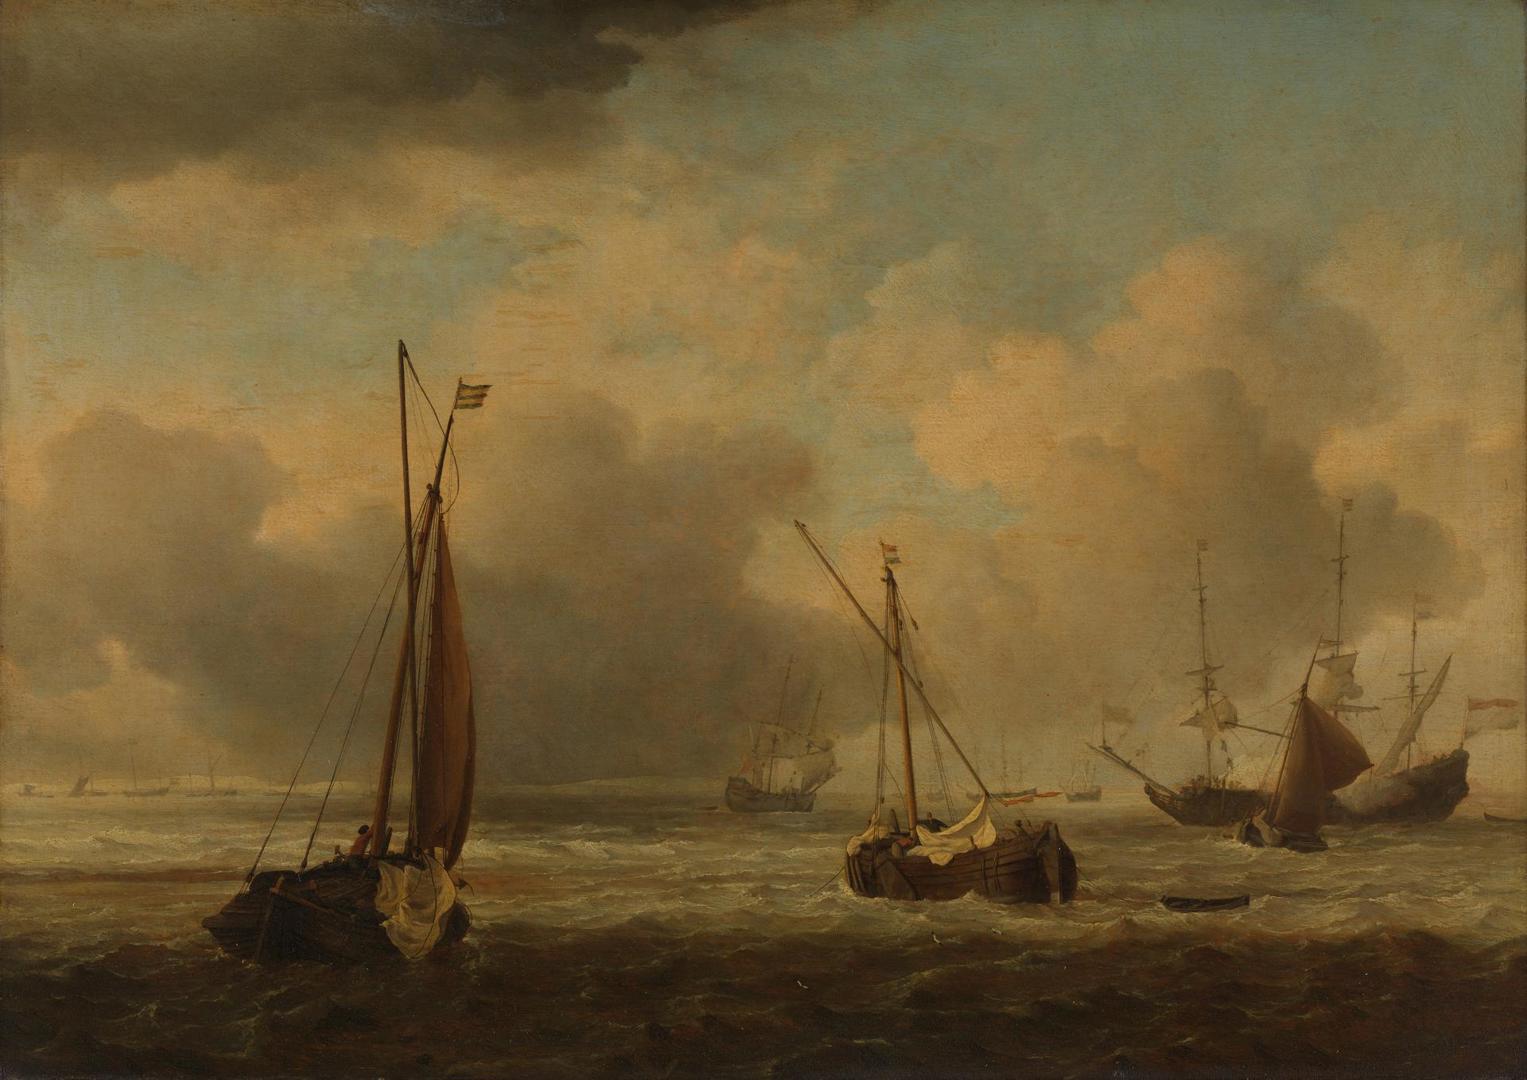 Dutch Ships and Small Vessels Offshore in a Breeze by Willem van de Velde